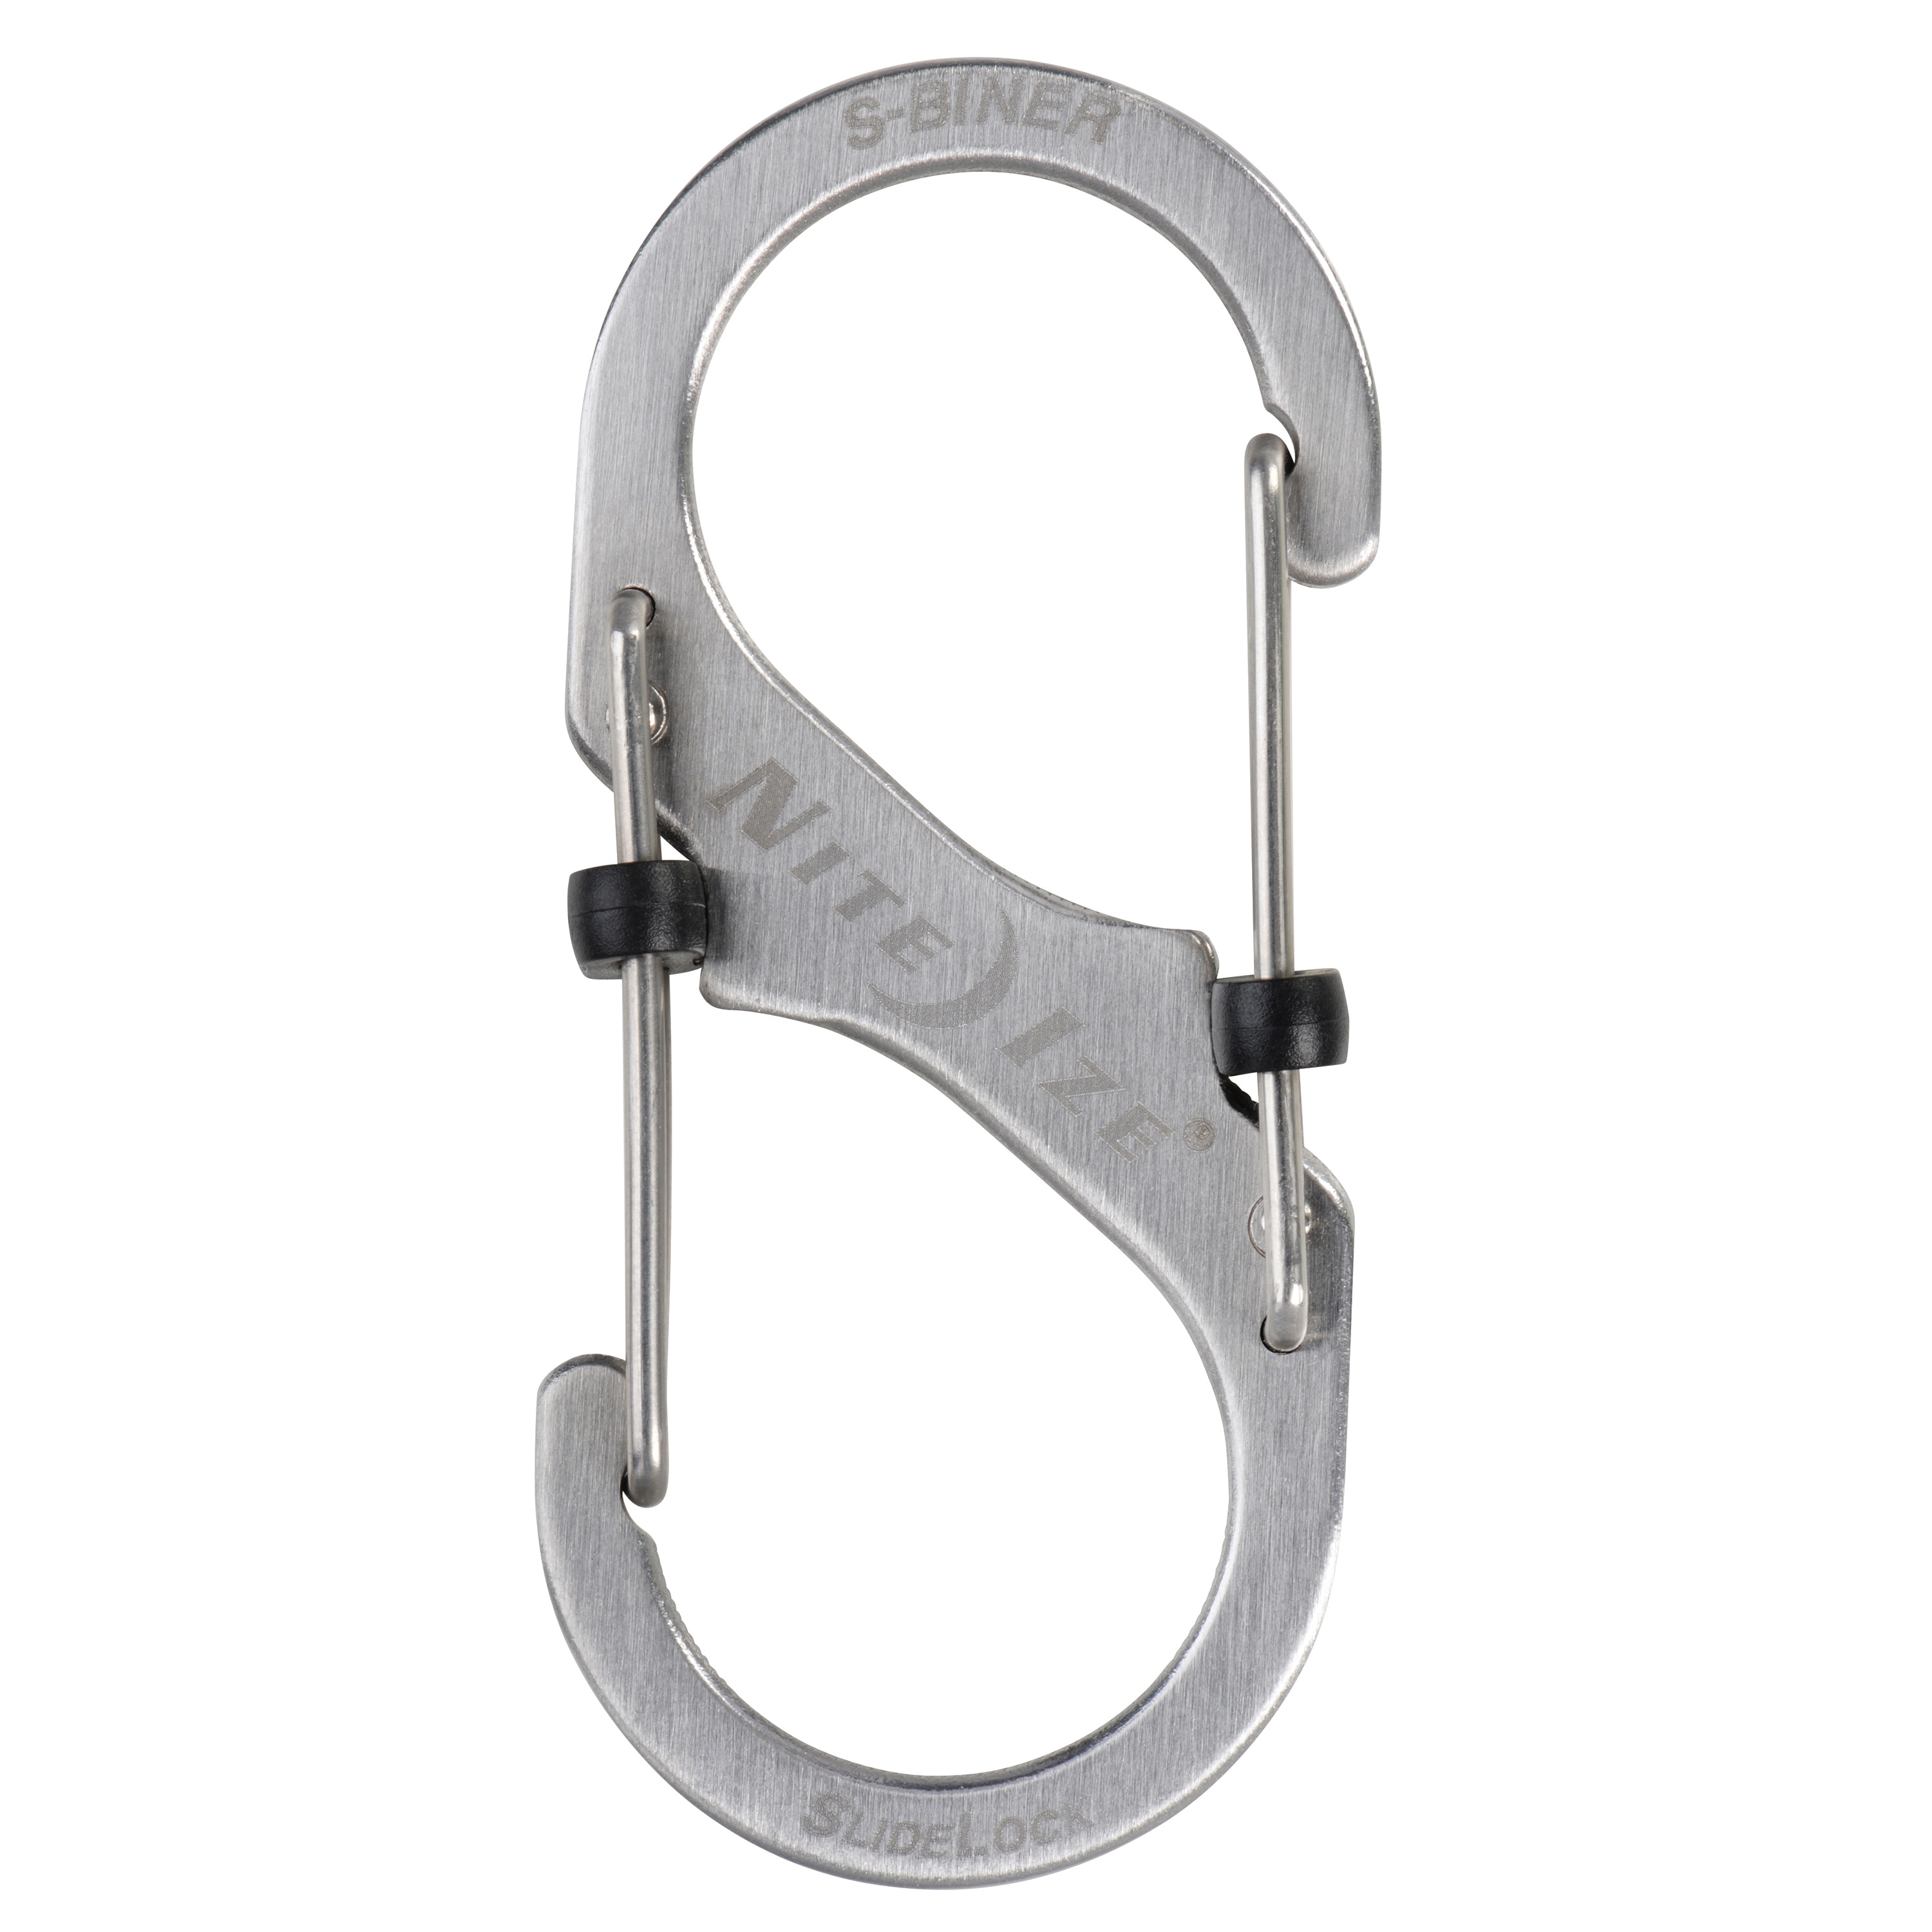 NiteIze SlideLock Stainless Steel Key Ring